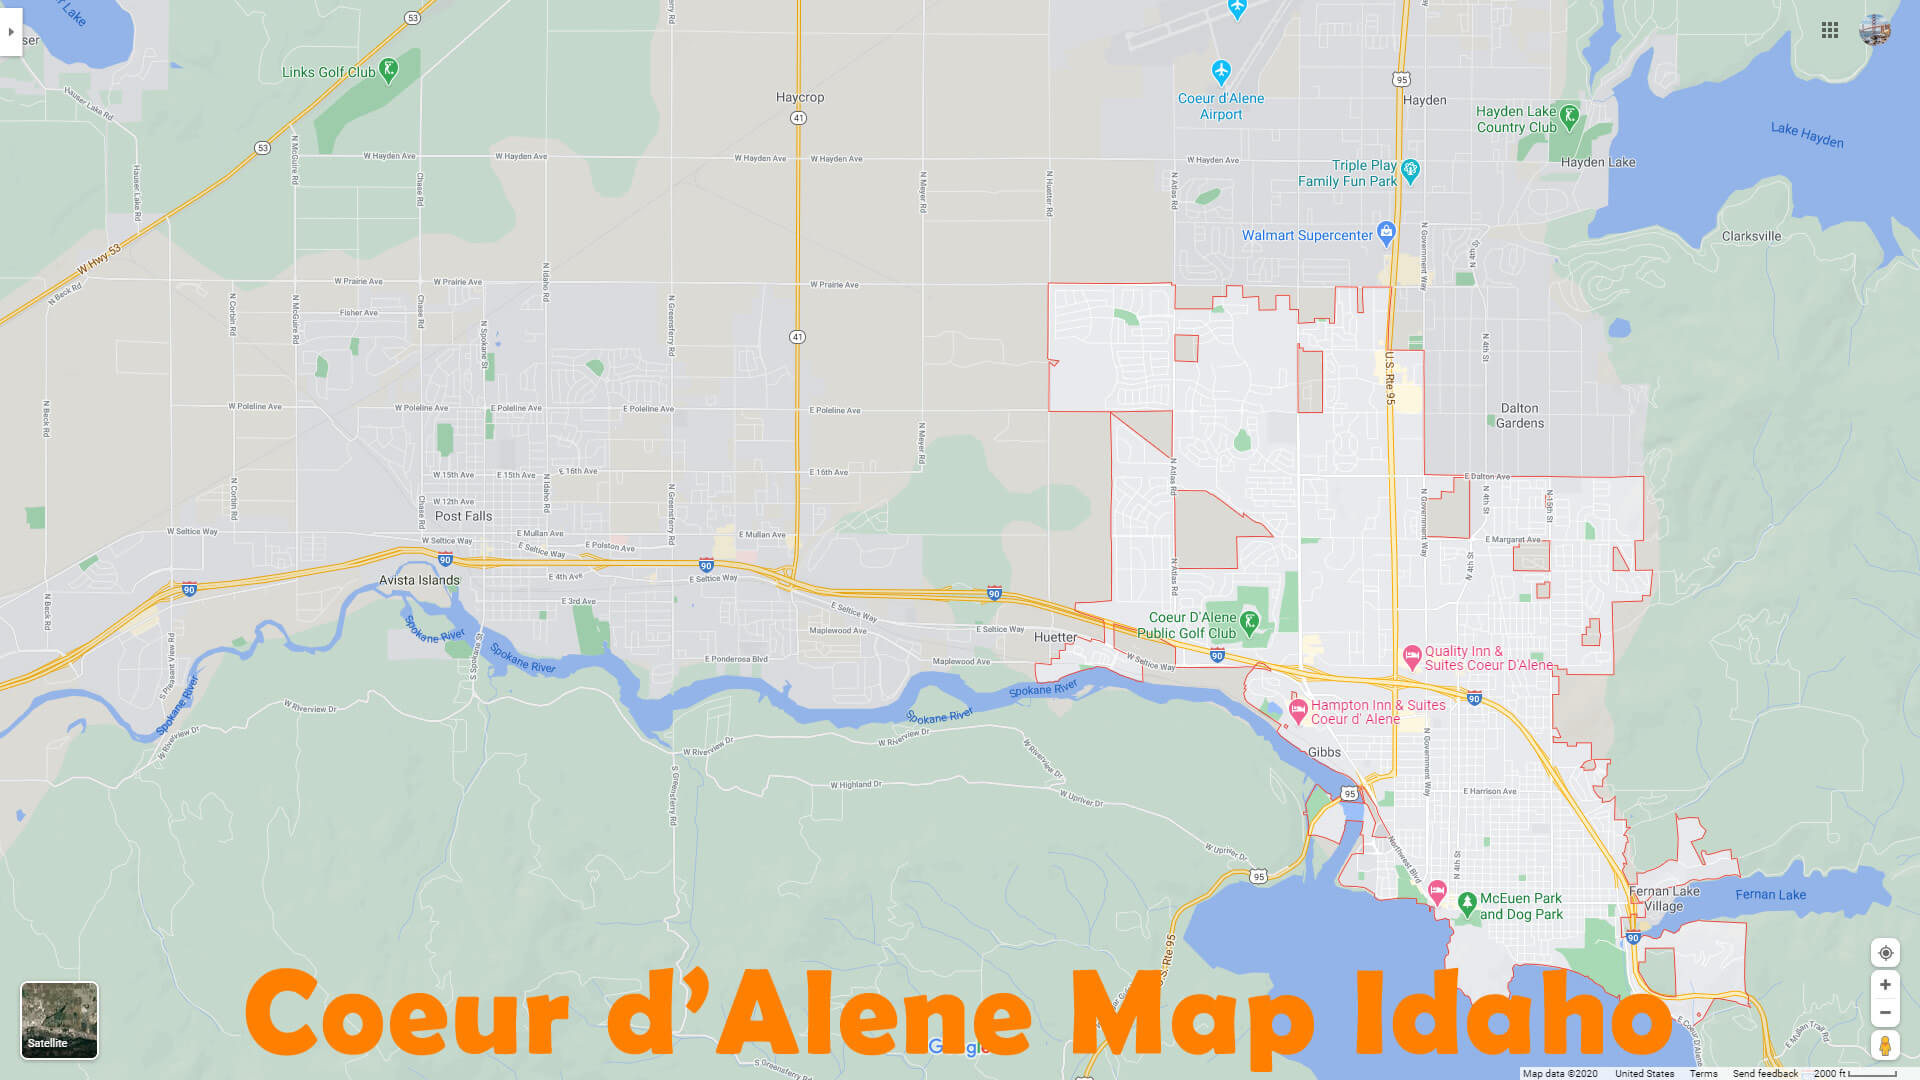 Coeur d'Alene Map Idaho